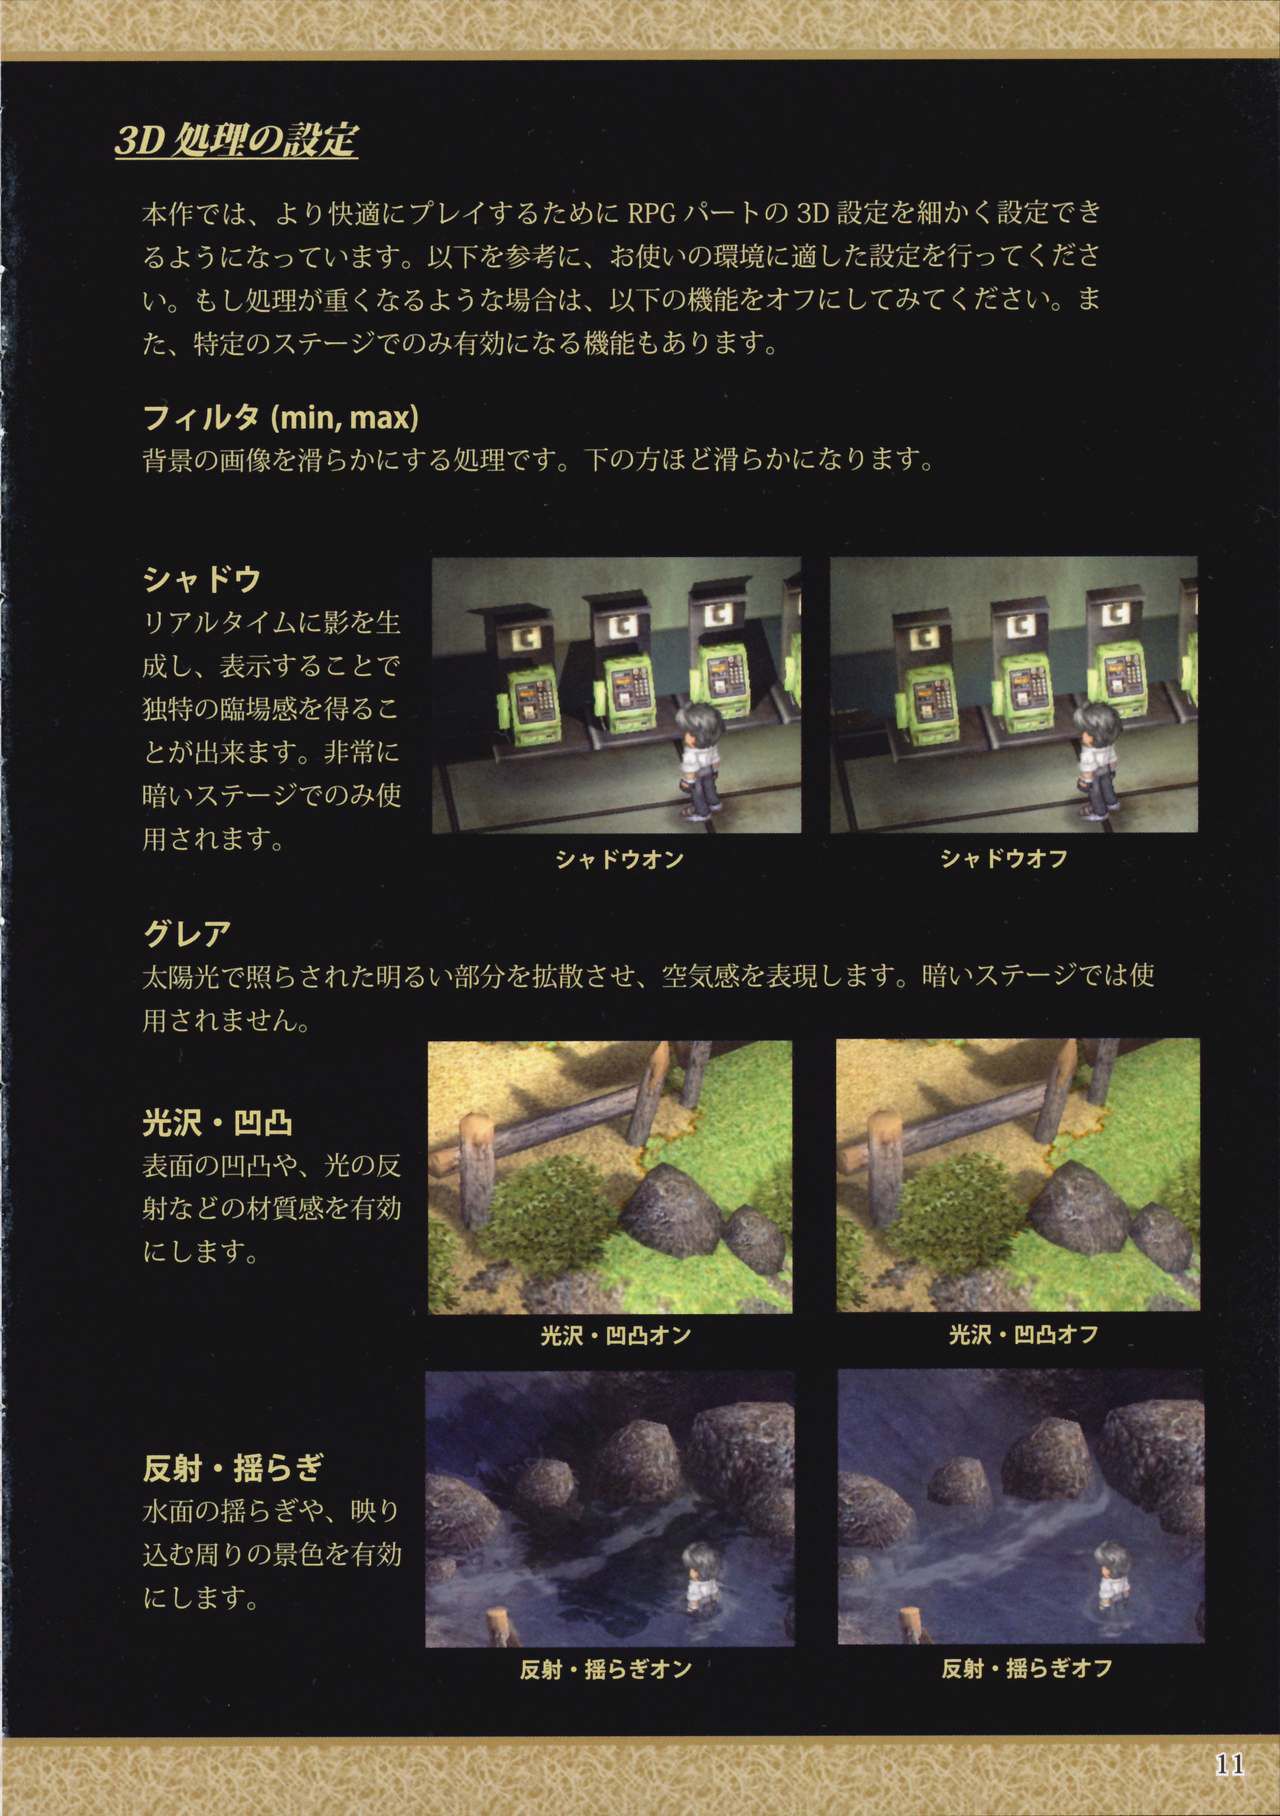 IZUMO 3 - Special Edition Manual 28